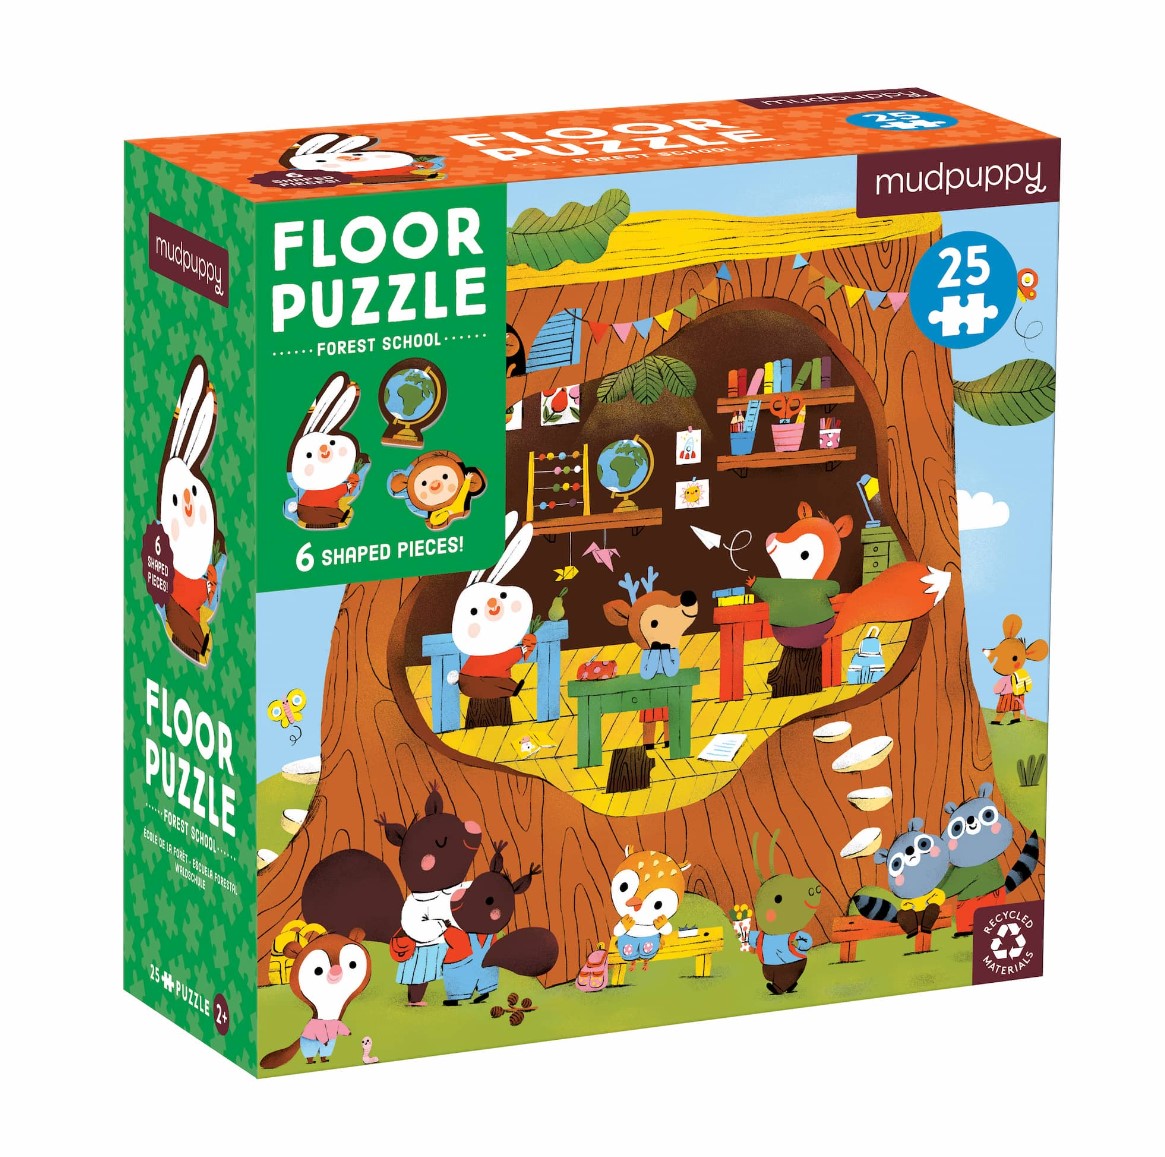 Mud Puppy | 25pc Floor Puzzle - Forest School